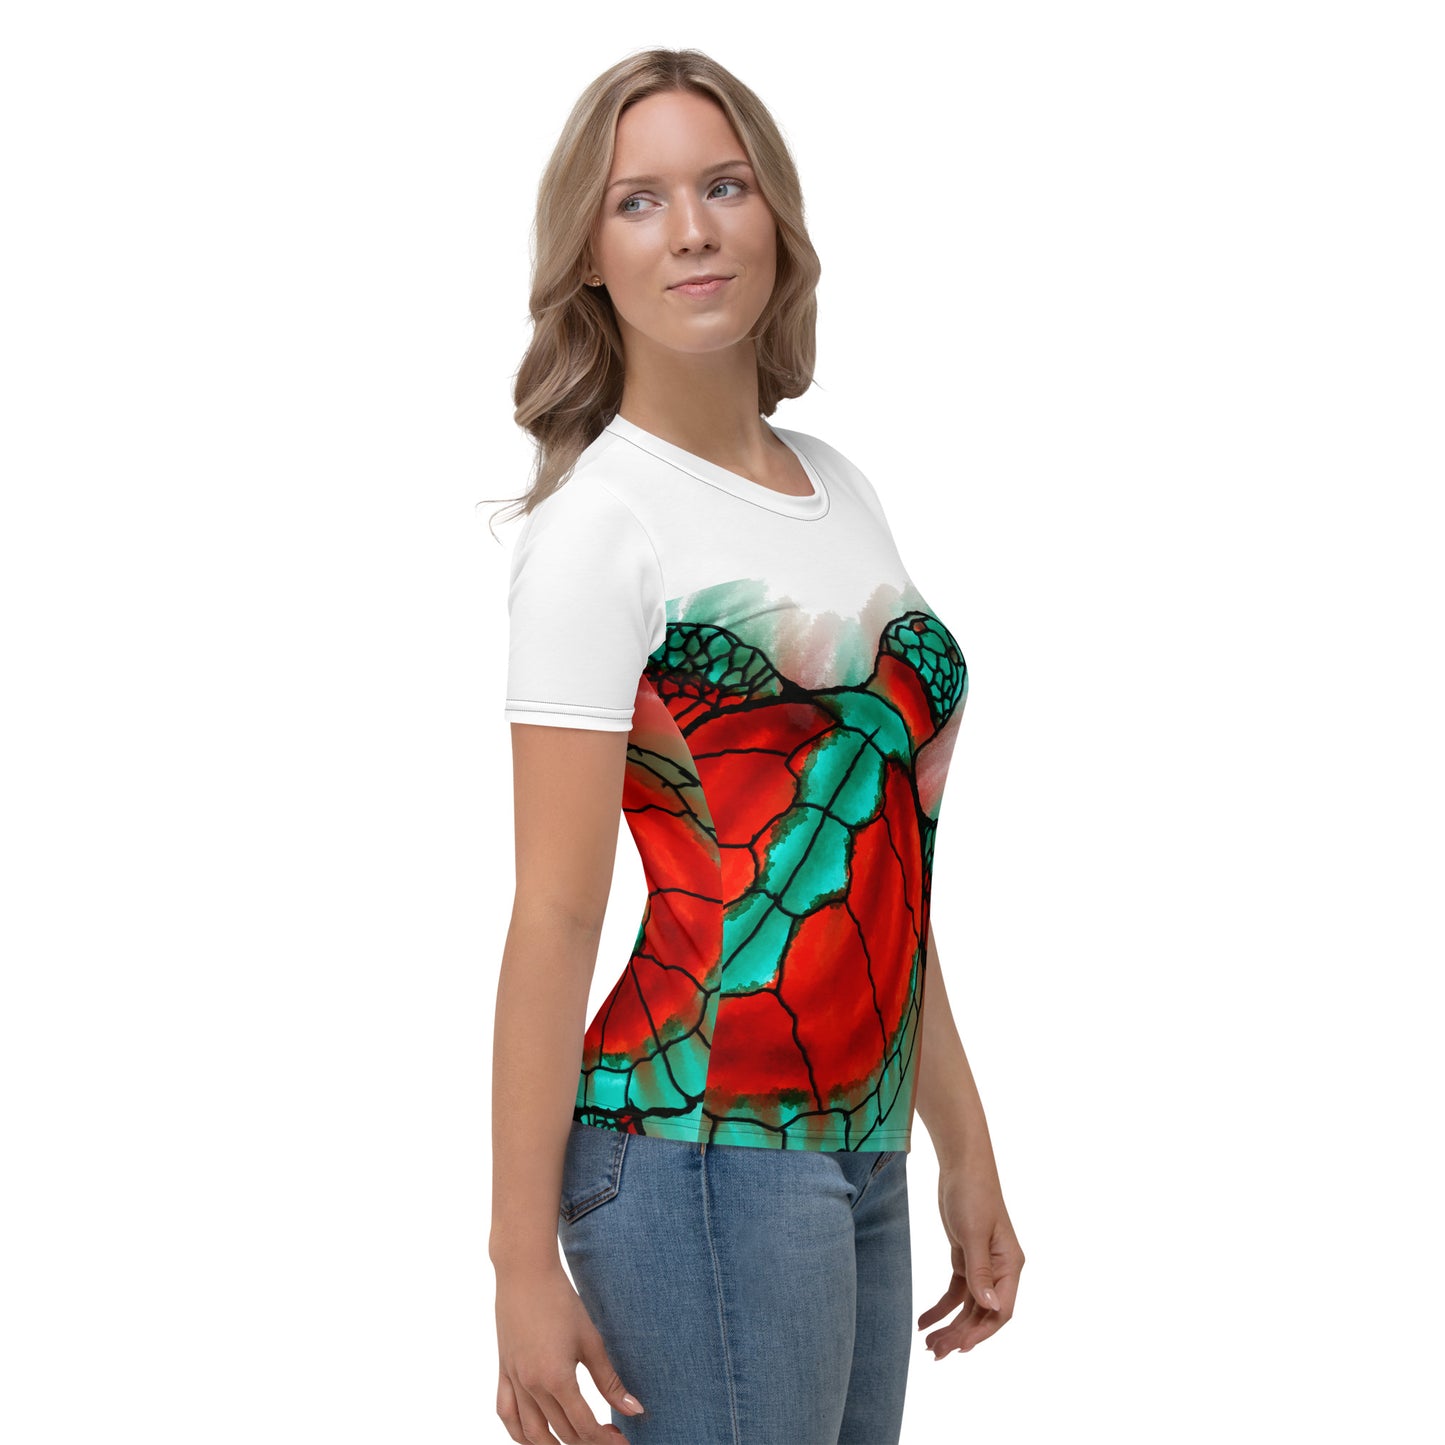 Melt Sea Turtle Women's T-shirt